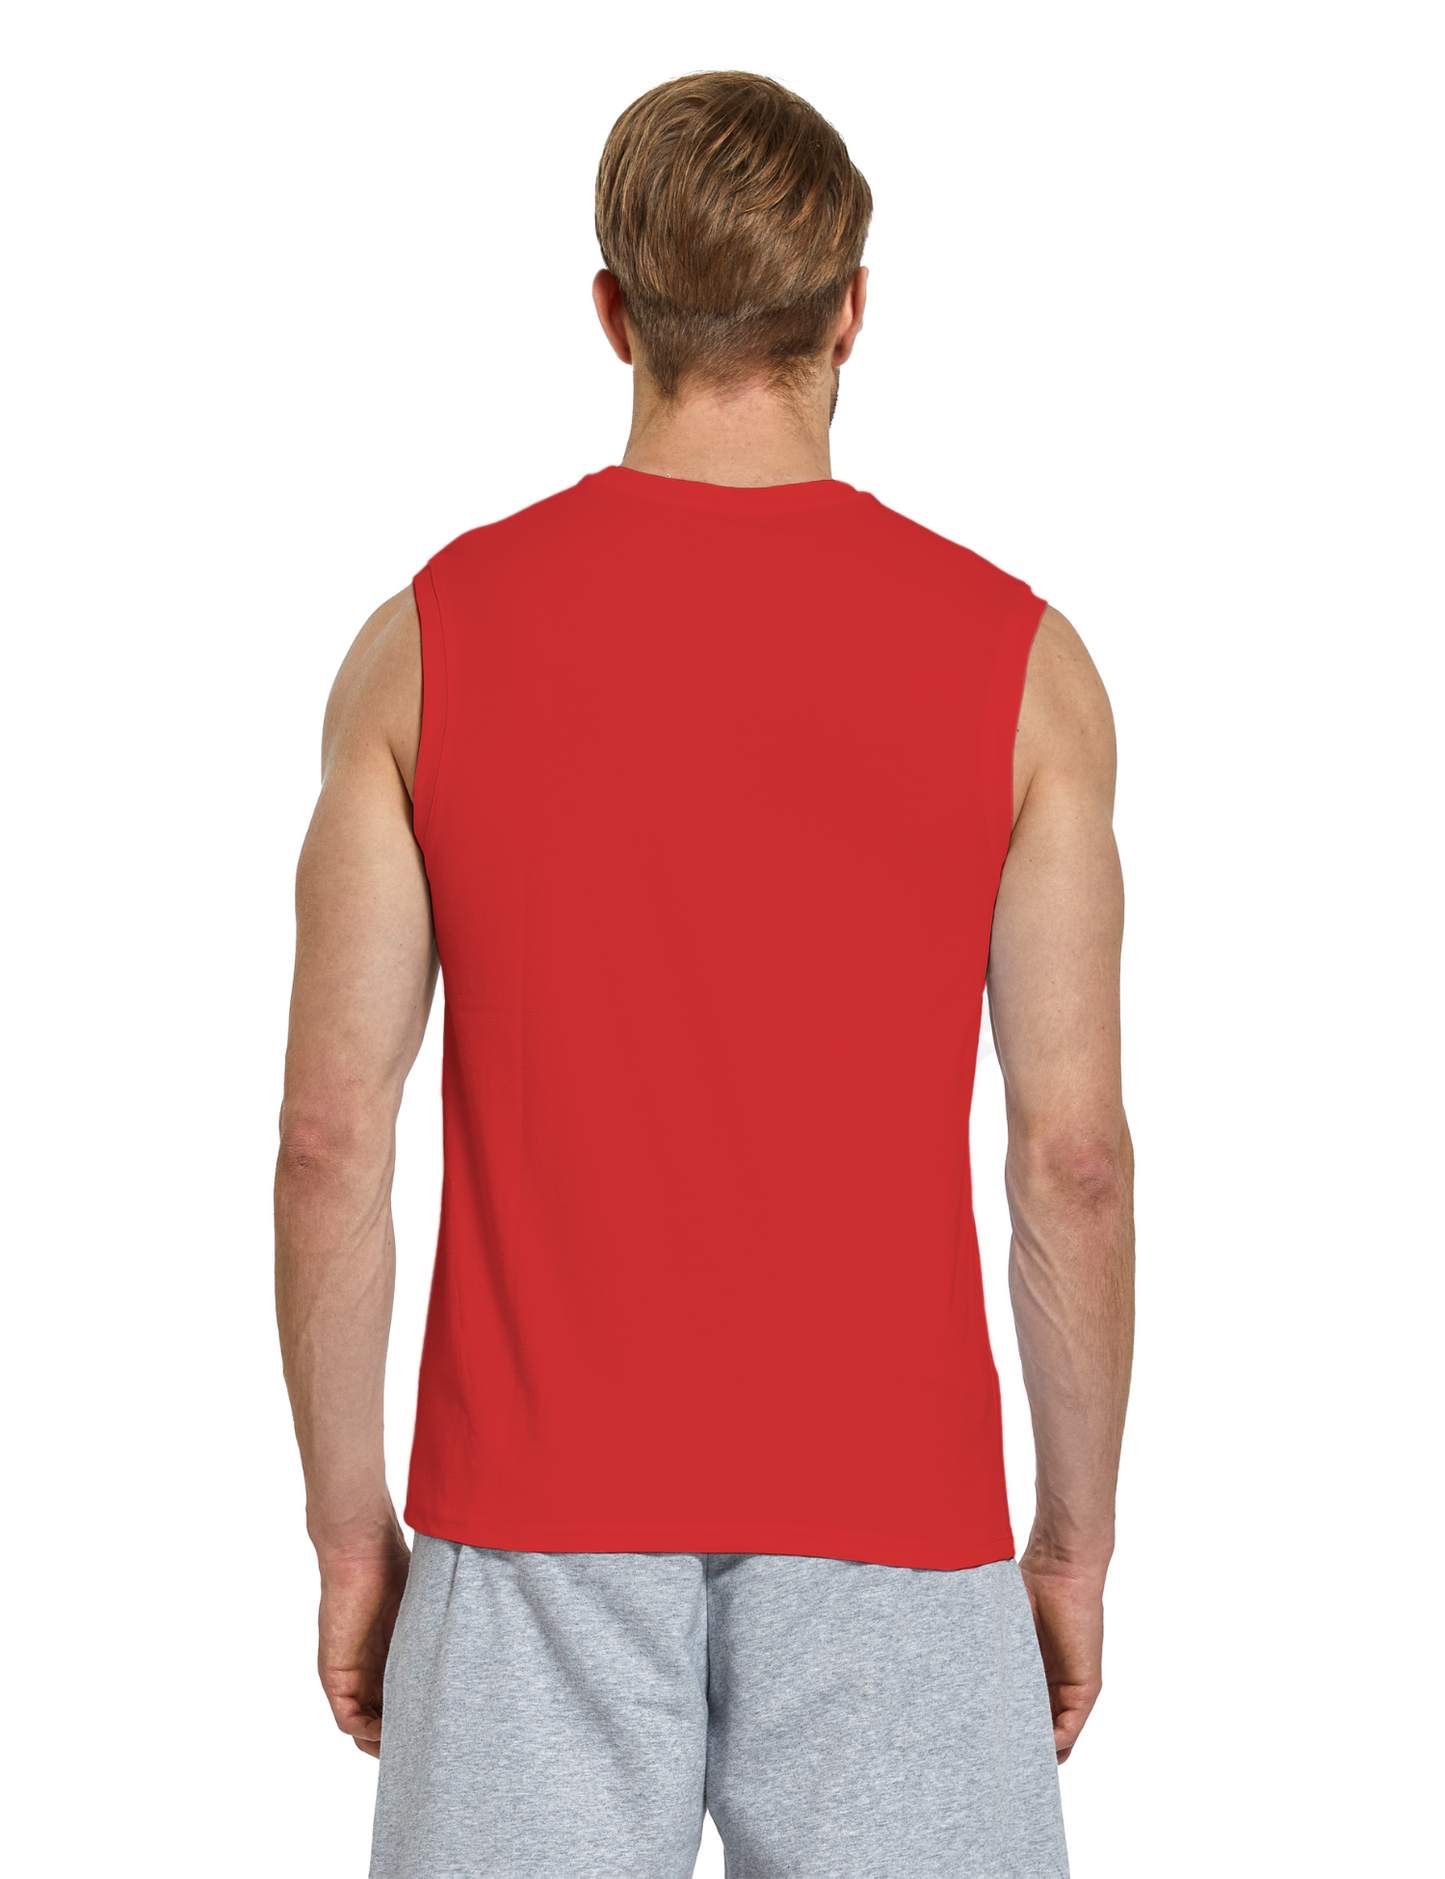 mens sleeveless shirts red